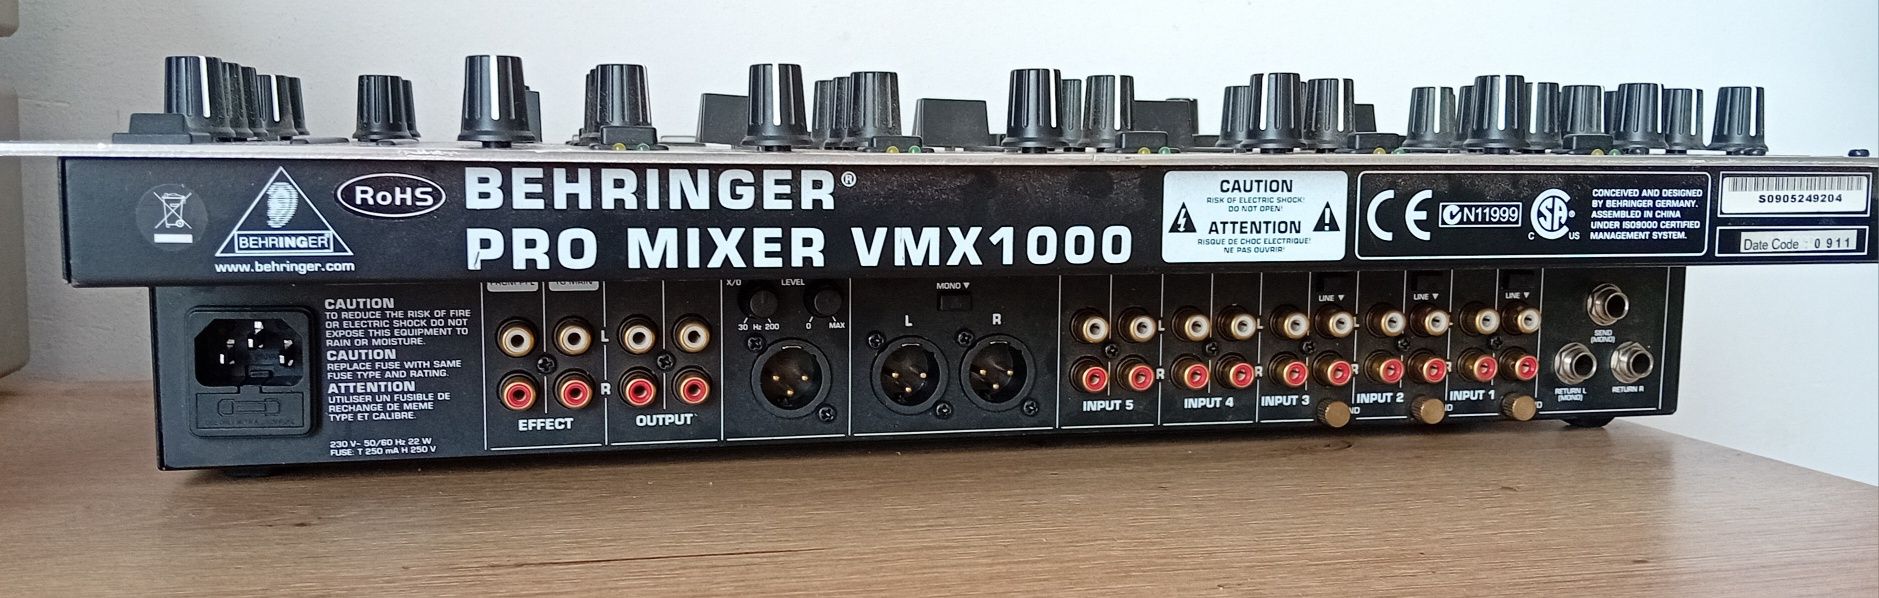 Mixer profesional dj Behringer Pro VMX 1000